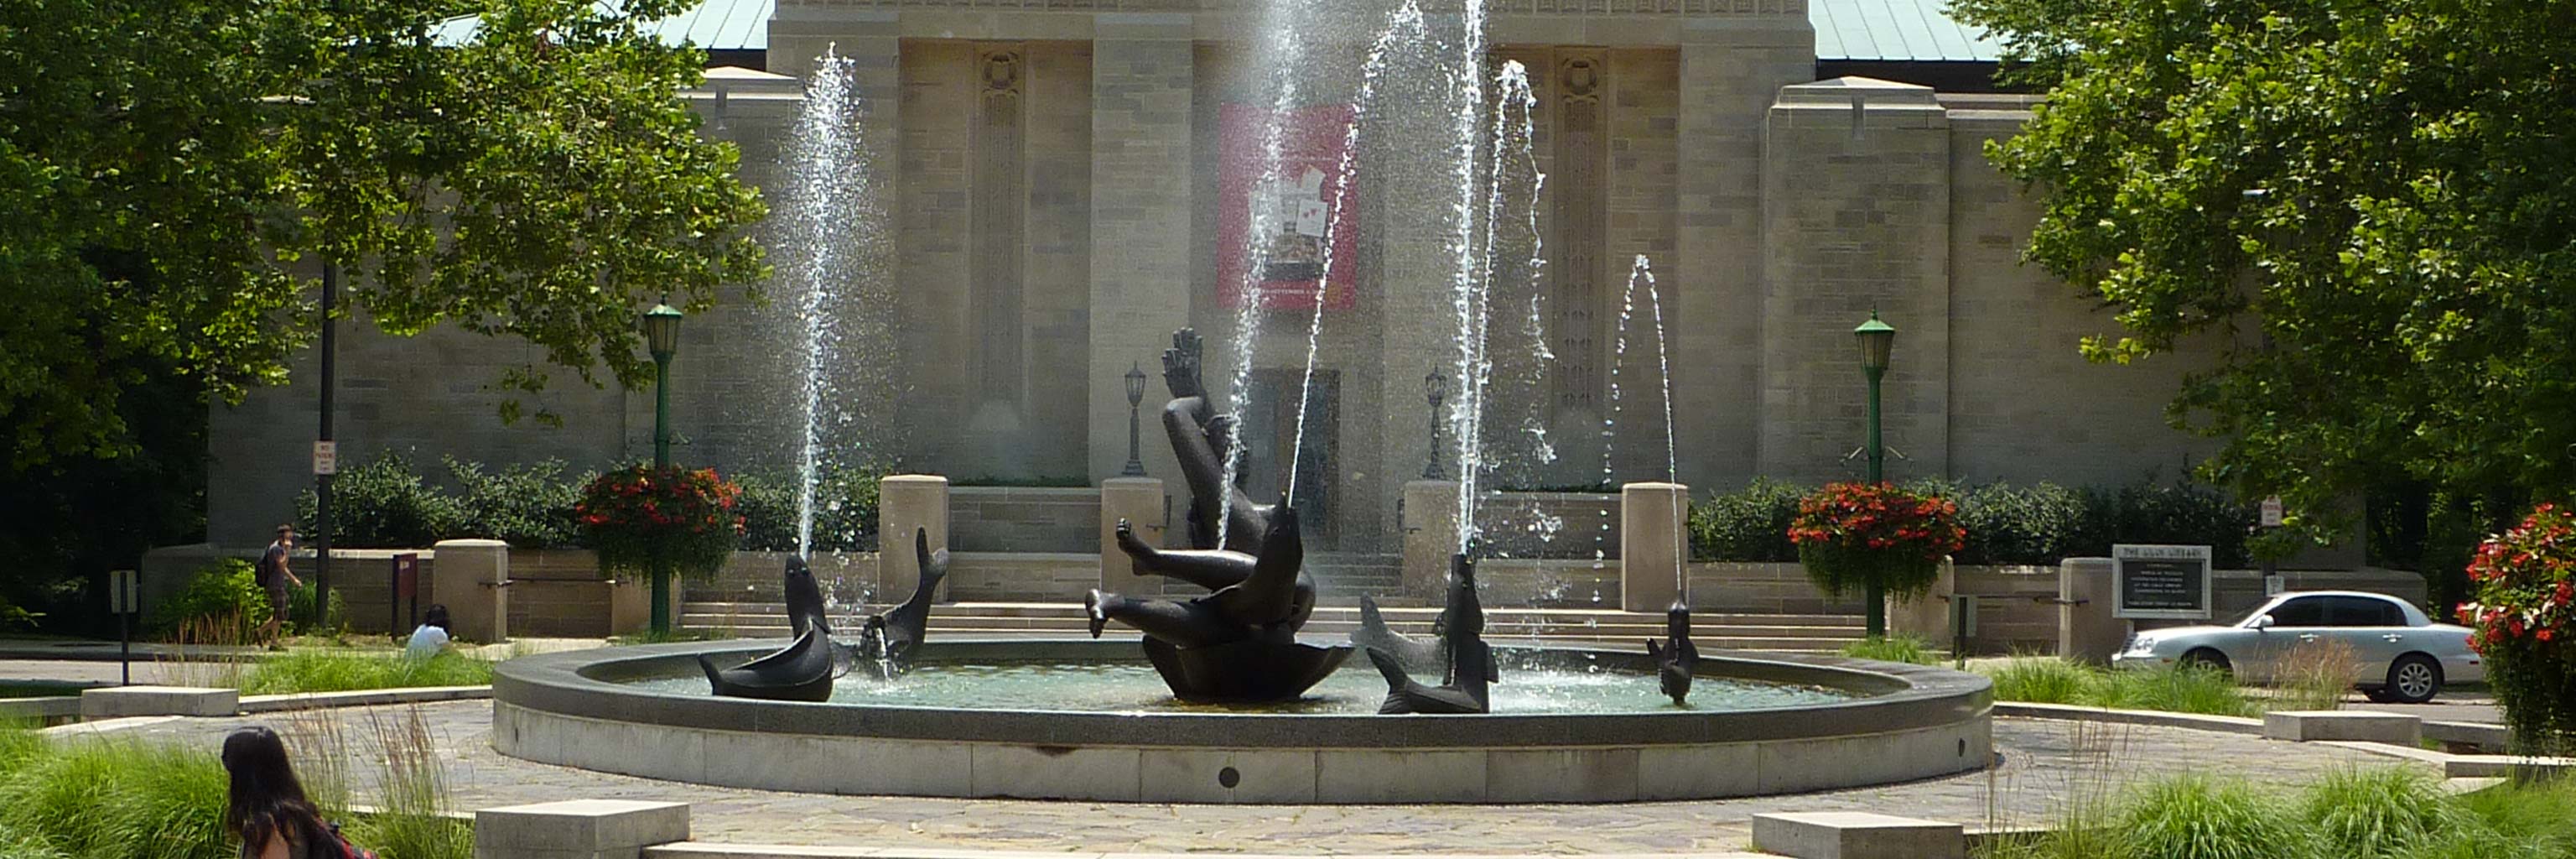 Showalter fountain on Indiana University campus